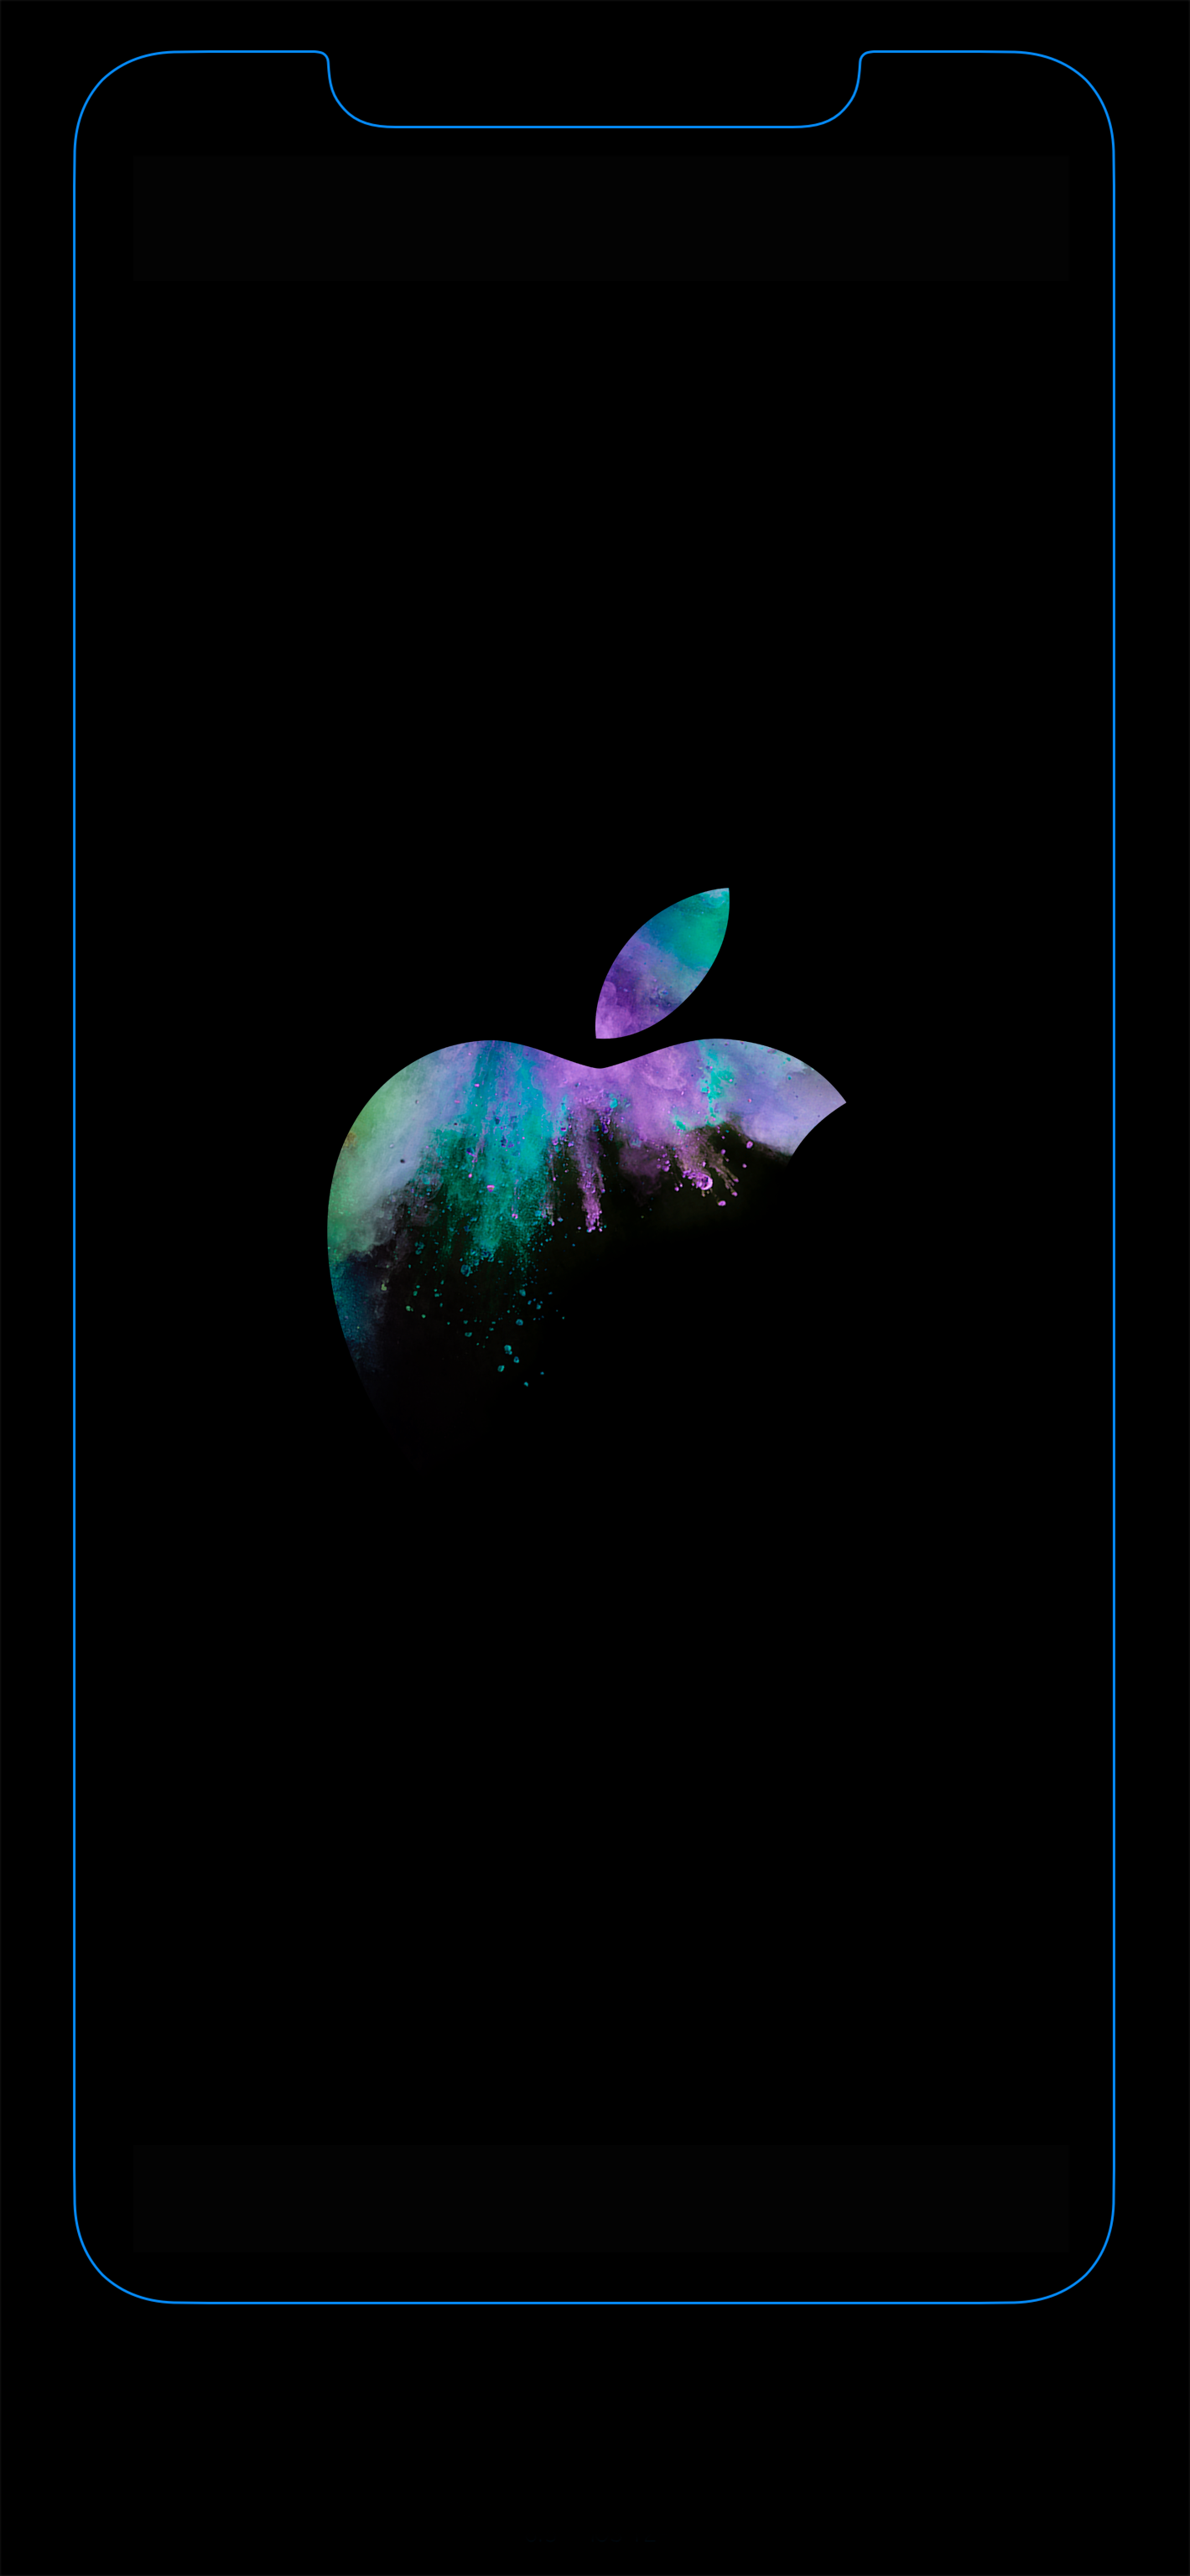 iPhone XS MAX跑马灯壁纸 苹果XS MAX边框发光壁纸高清下载